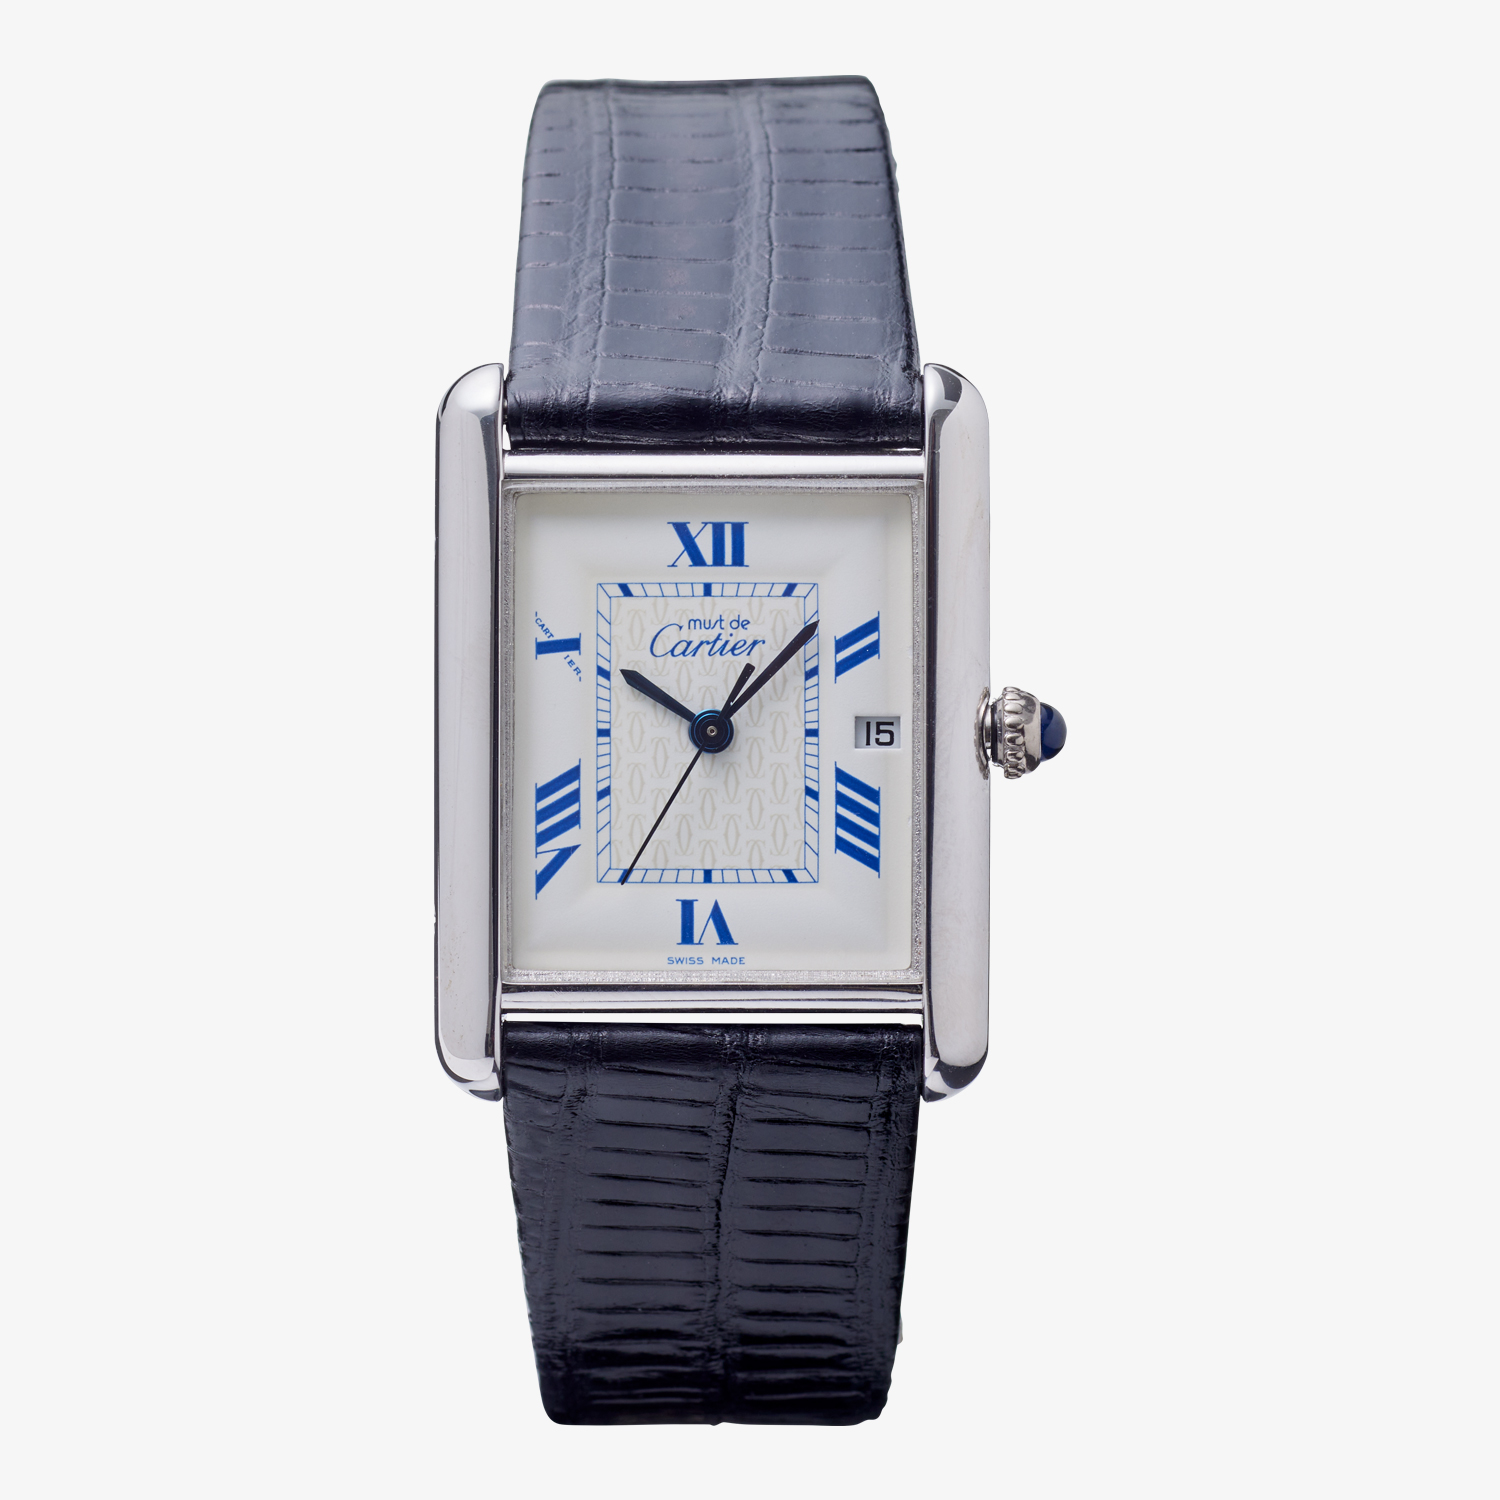 Cartier｜must de Cartier TANK LL｜Six Point Roman Dial ｜Date｜Silver / White - 90's｜Cartier (Vintage Watch)